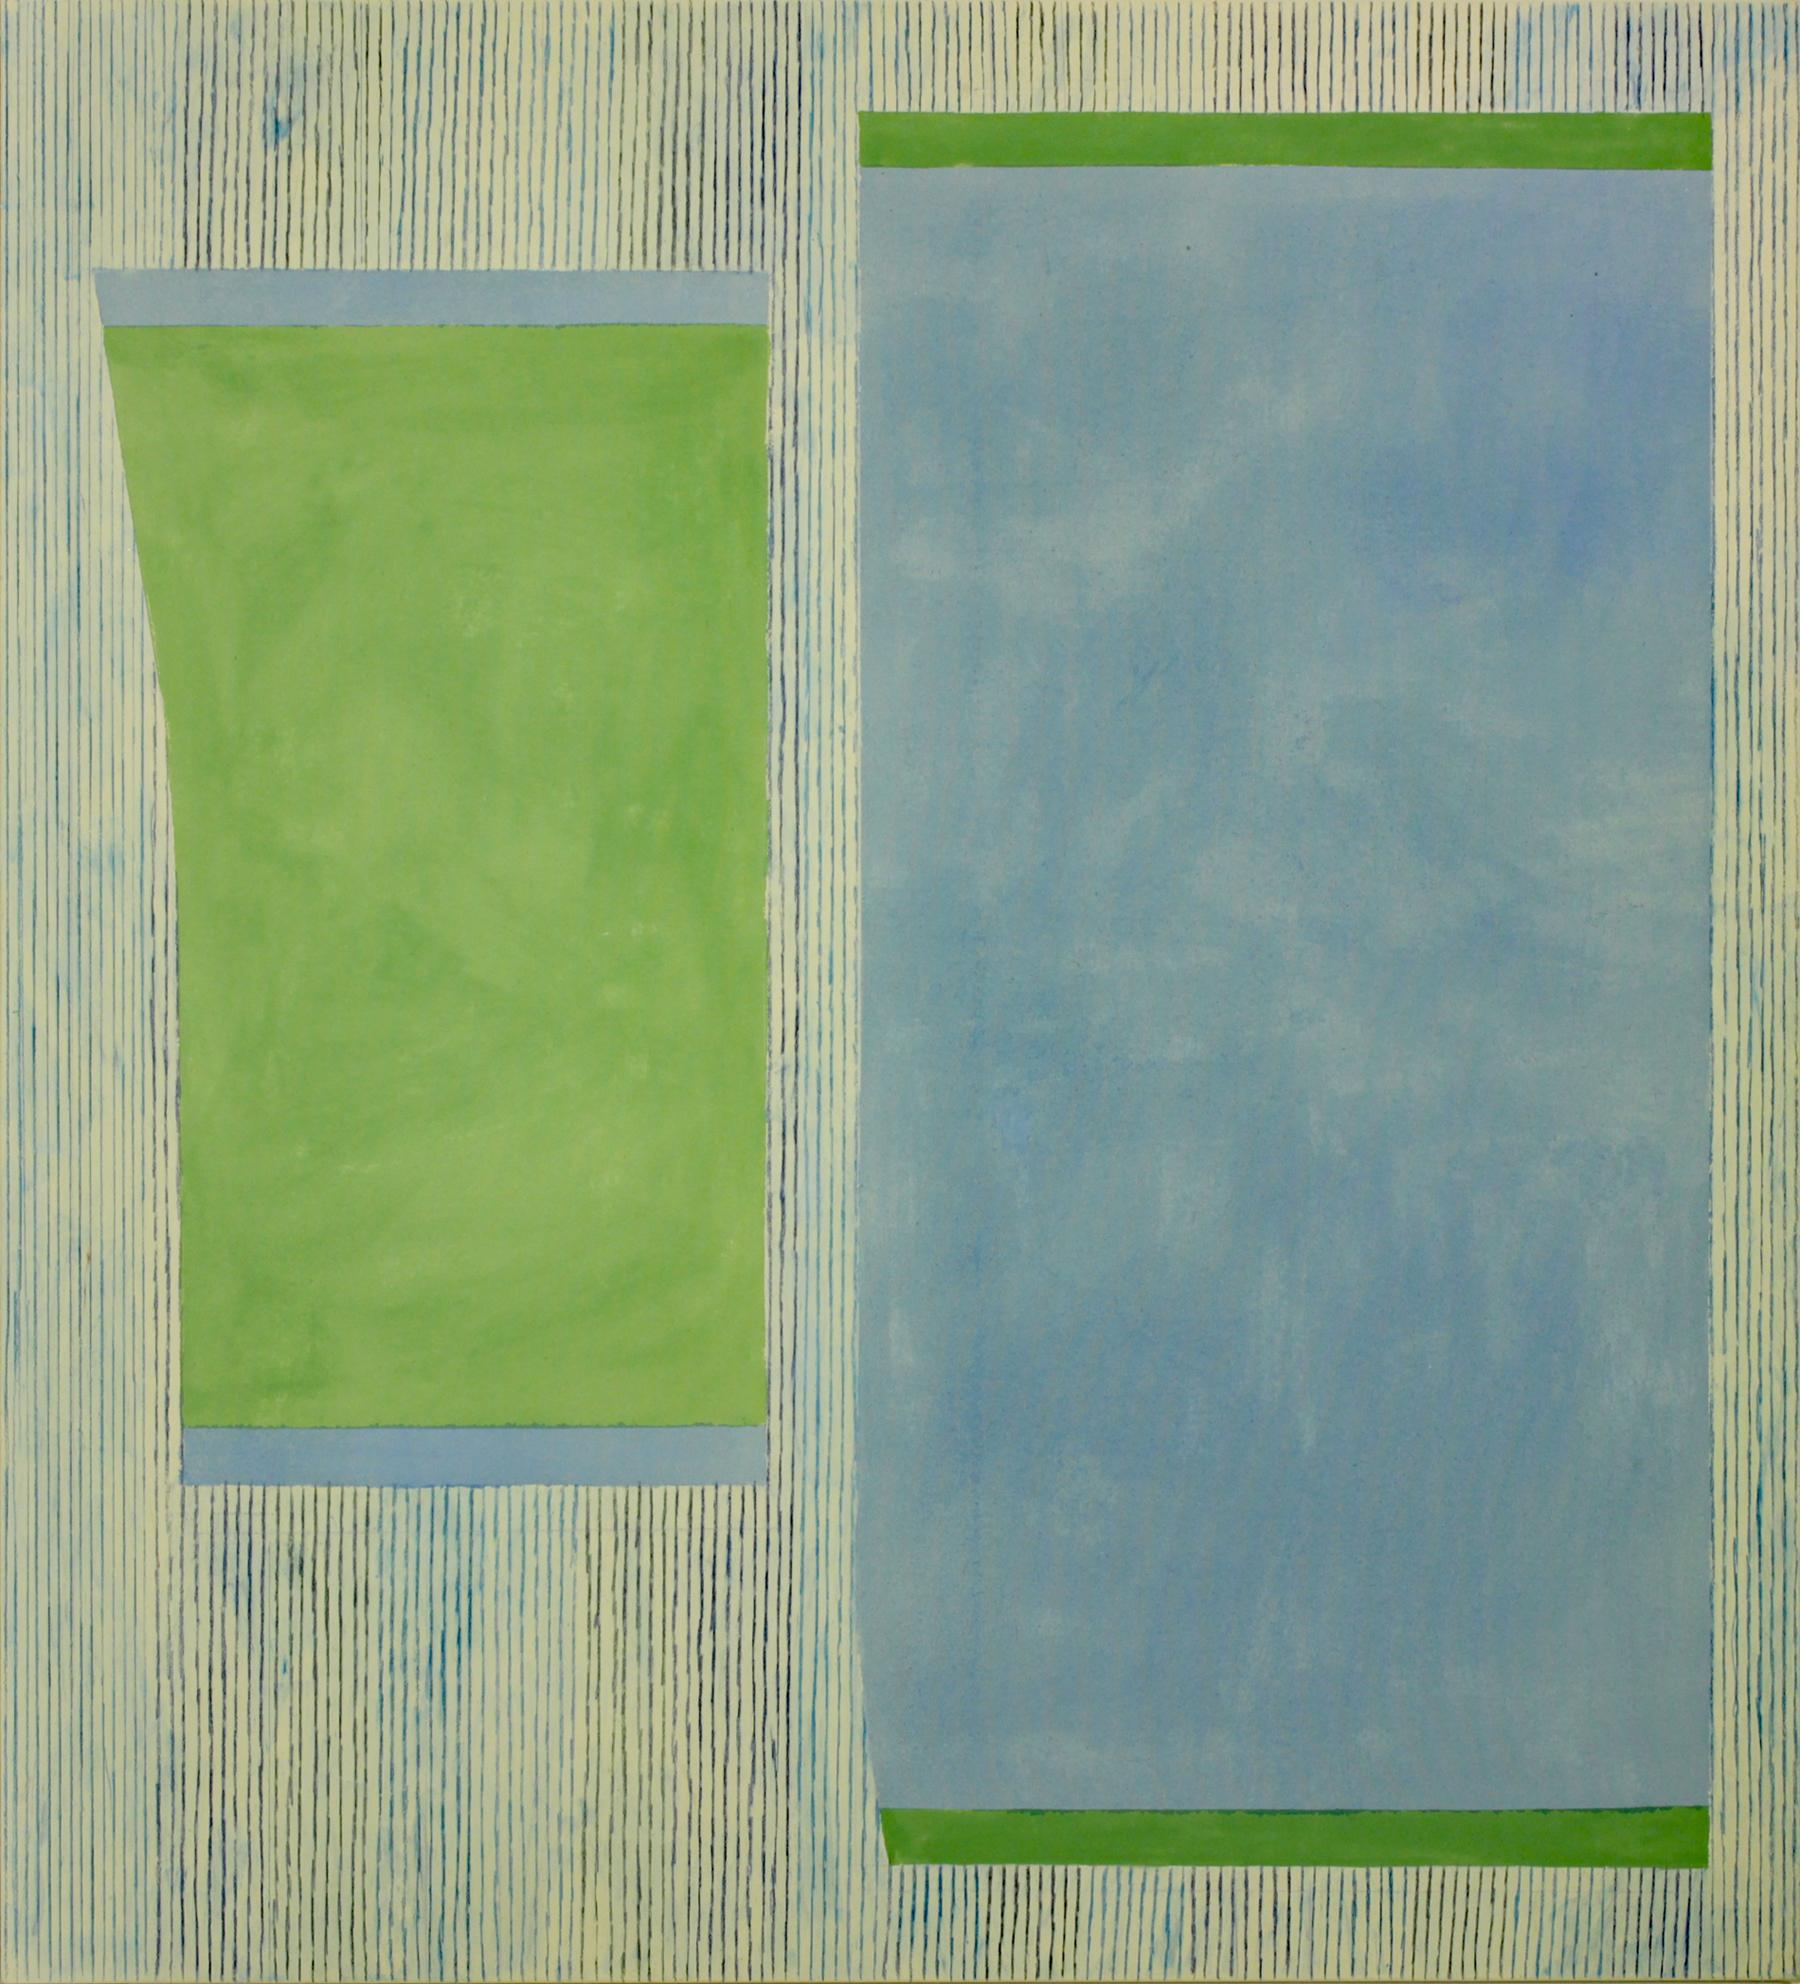 Bluecobalt Green, Light Blue, Grass Green, Stripes, Geometric Abstract Painting